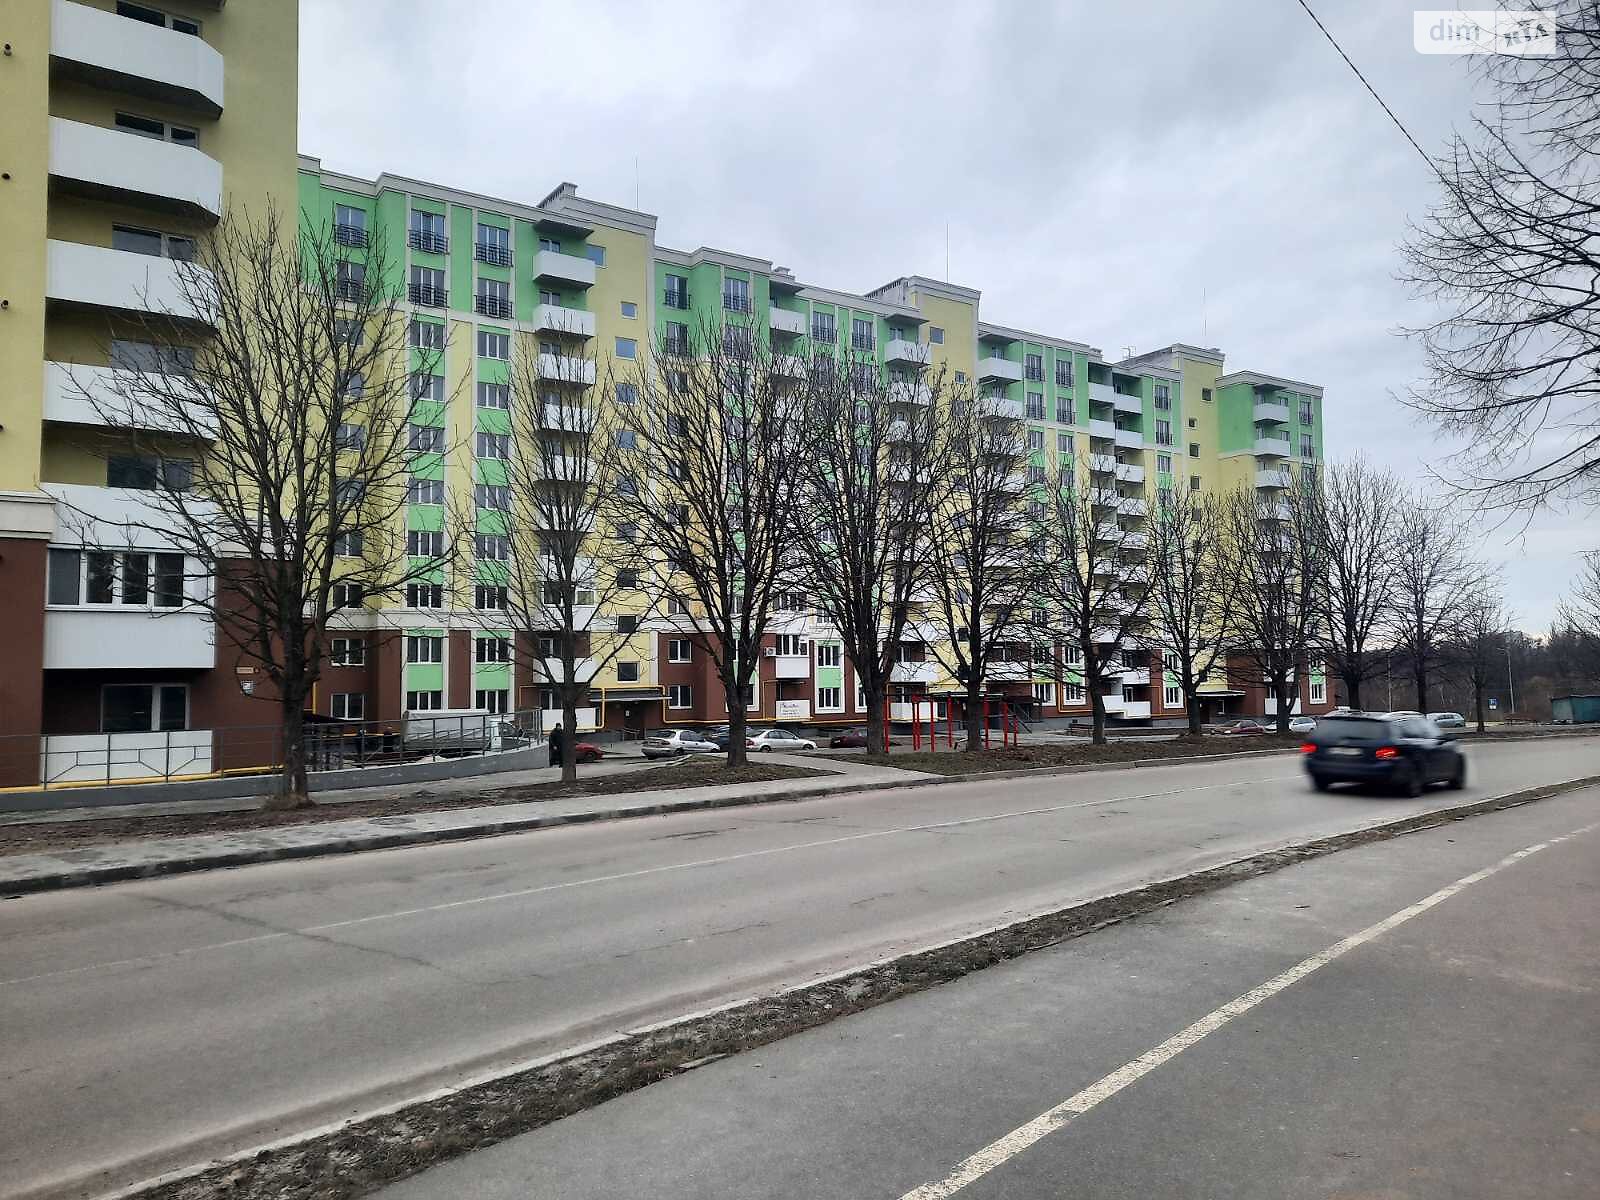 Продажа трехкомнатной квартиры в Полтаве, на ул. Джохара Дудаева, район Сады 3 (Огнивка) фото 1